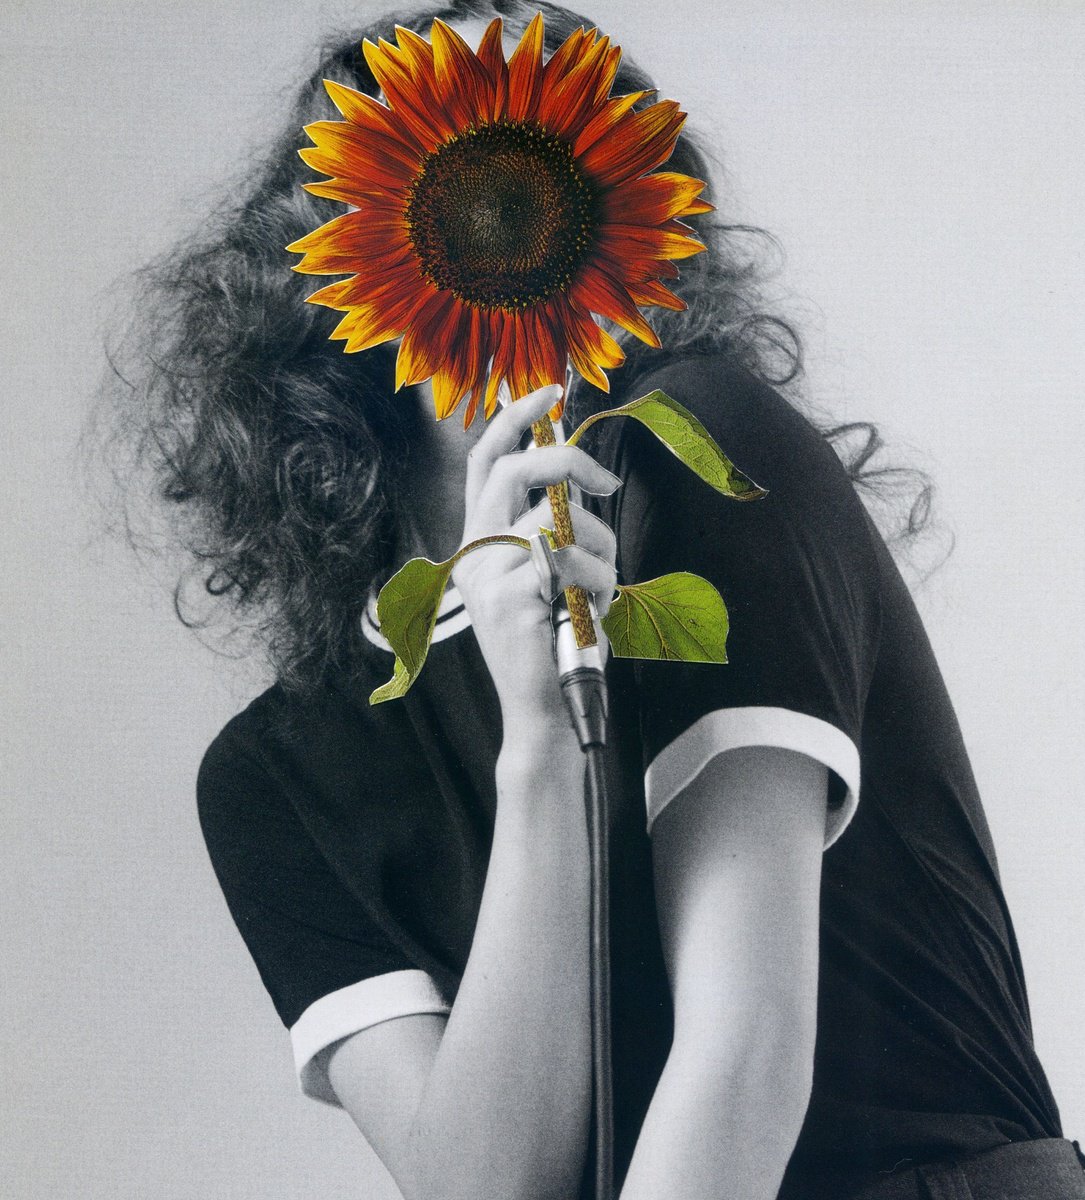 The Singing Sunflower by Linda Simon